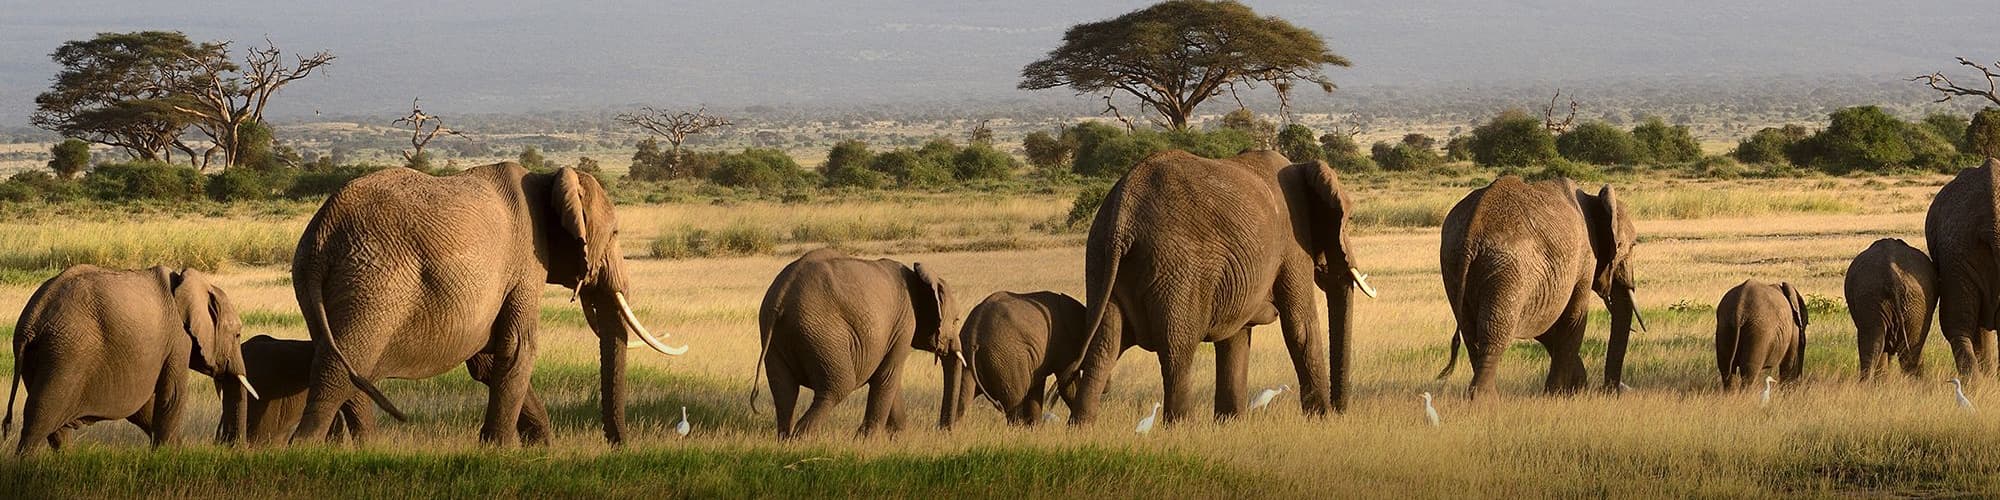 Voyage, trek et safari en Tanzanie © Nyiragongo / Adobe Stock